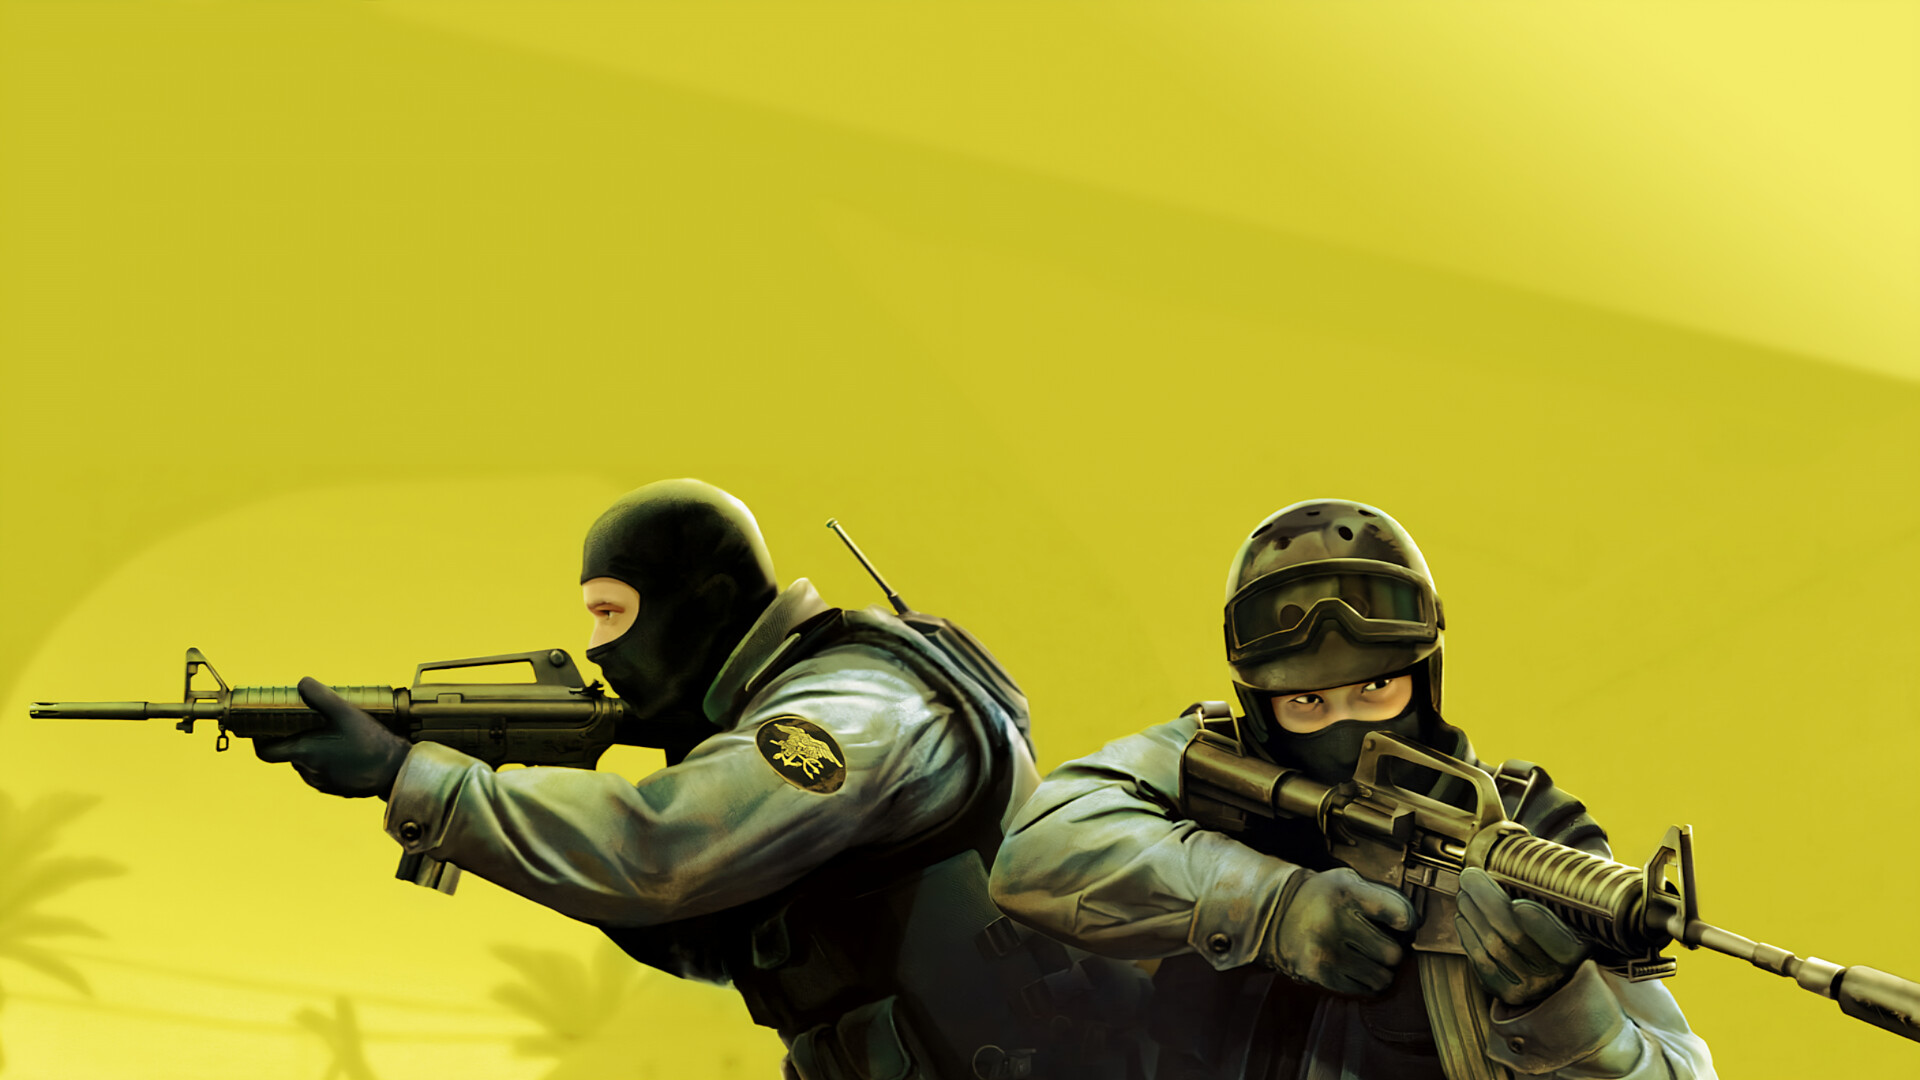 ArtStation - Counter-Strike: Global Offensive